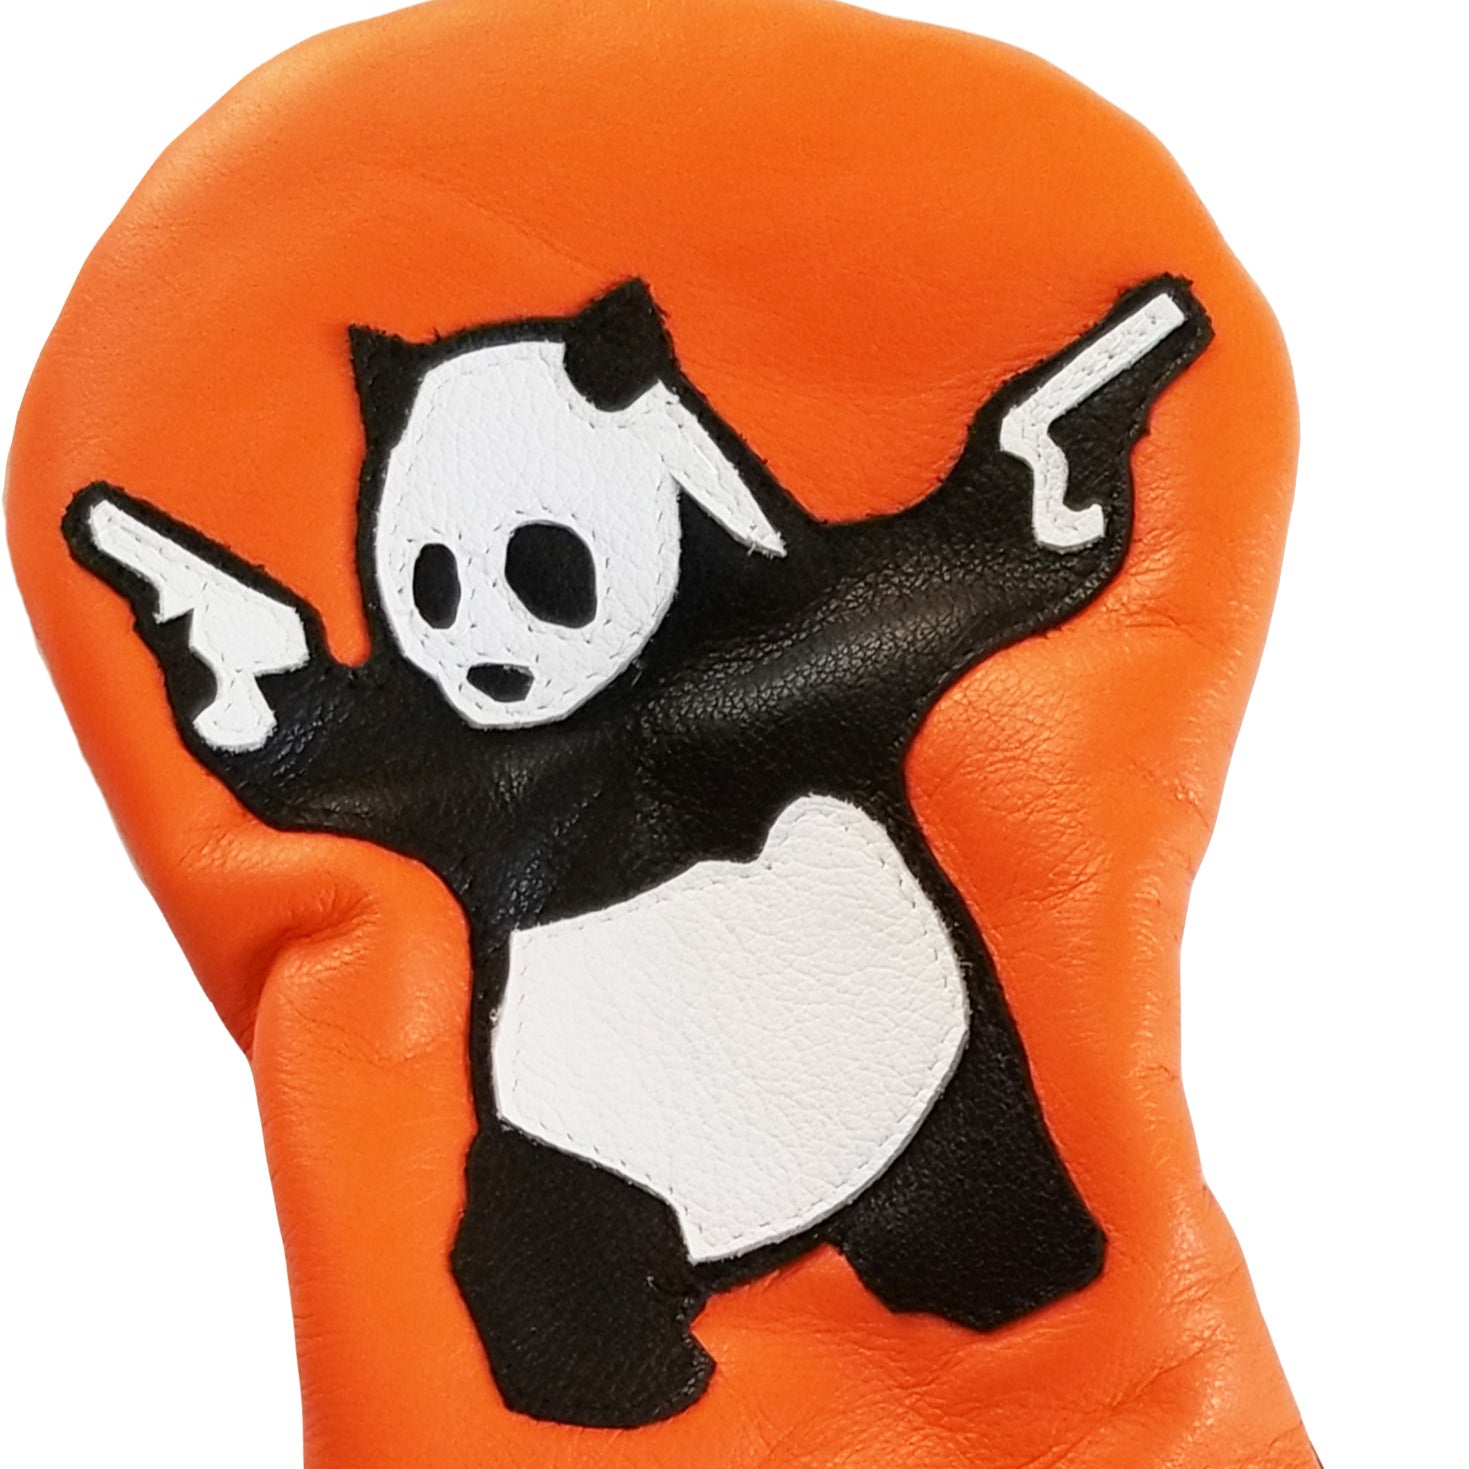 Panda With Guns Headcover - Robert Mark Golf